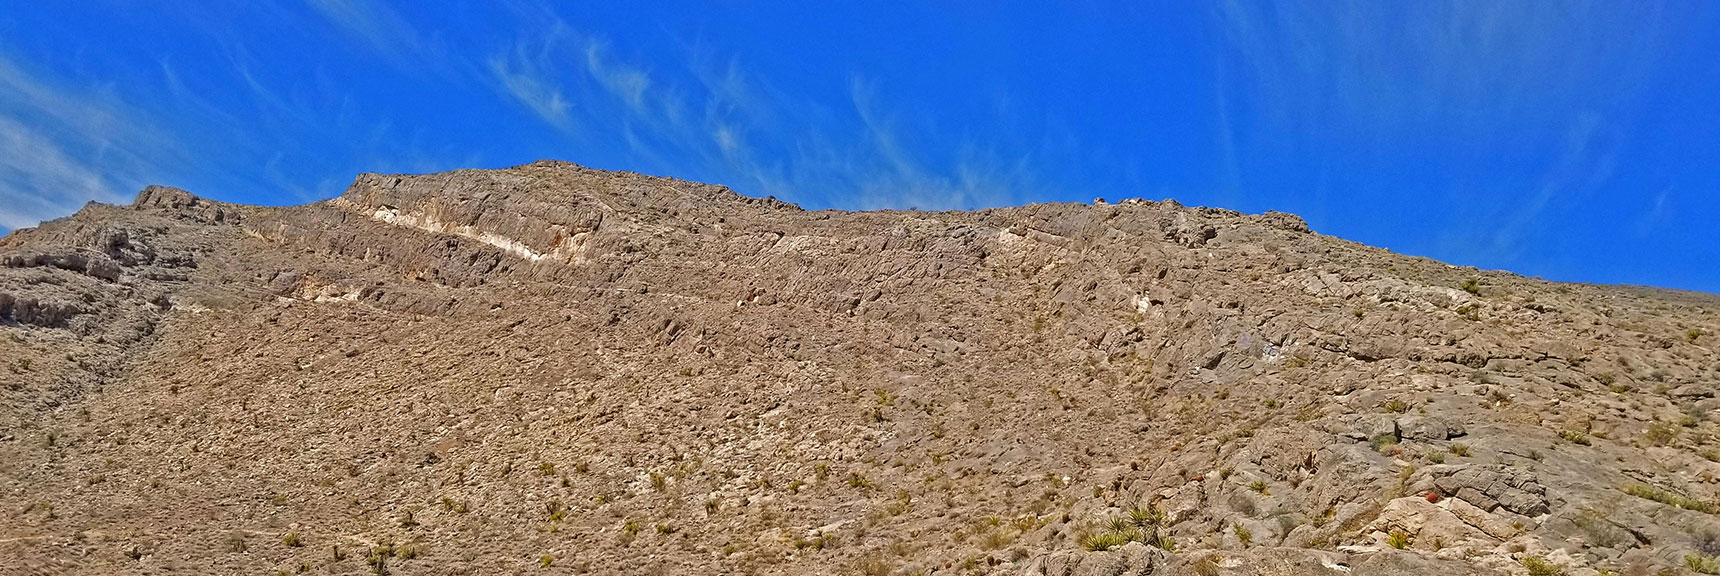 Potential Class 3 Summit Ridge Approach South of Trigono Park | Cheyenne Mountain | Las Vegas, Nevada